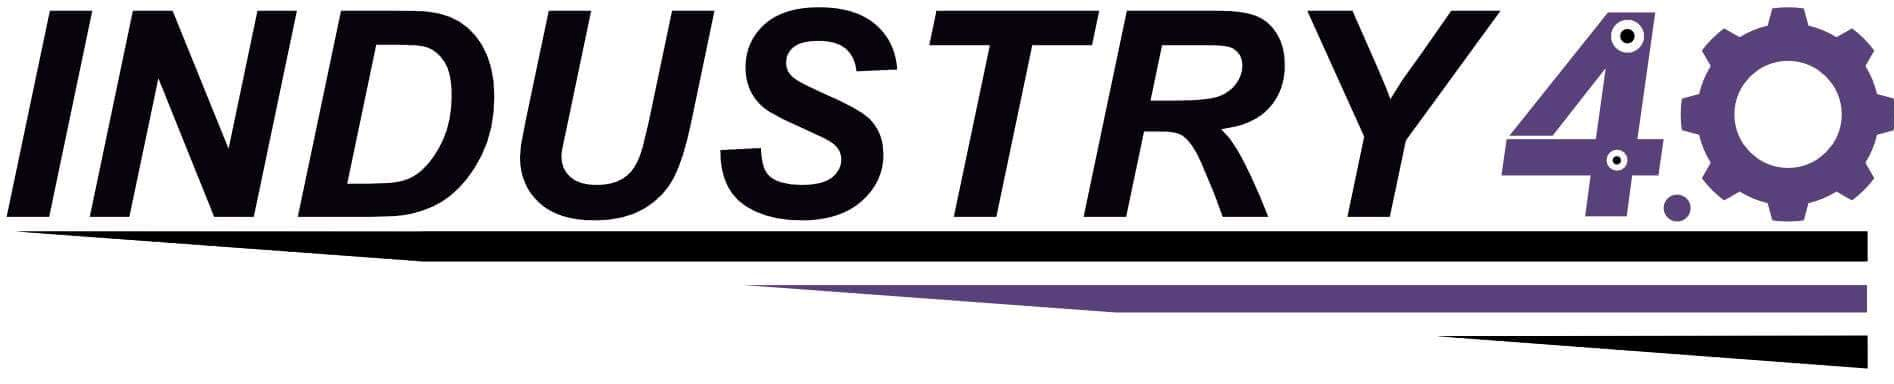 Industry 4.0 Logo - black white & purple (simple design)